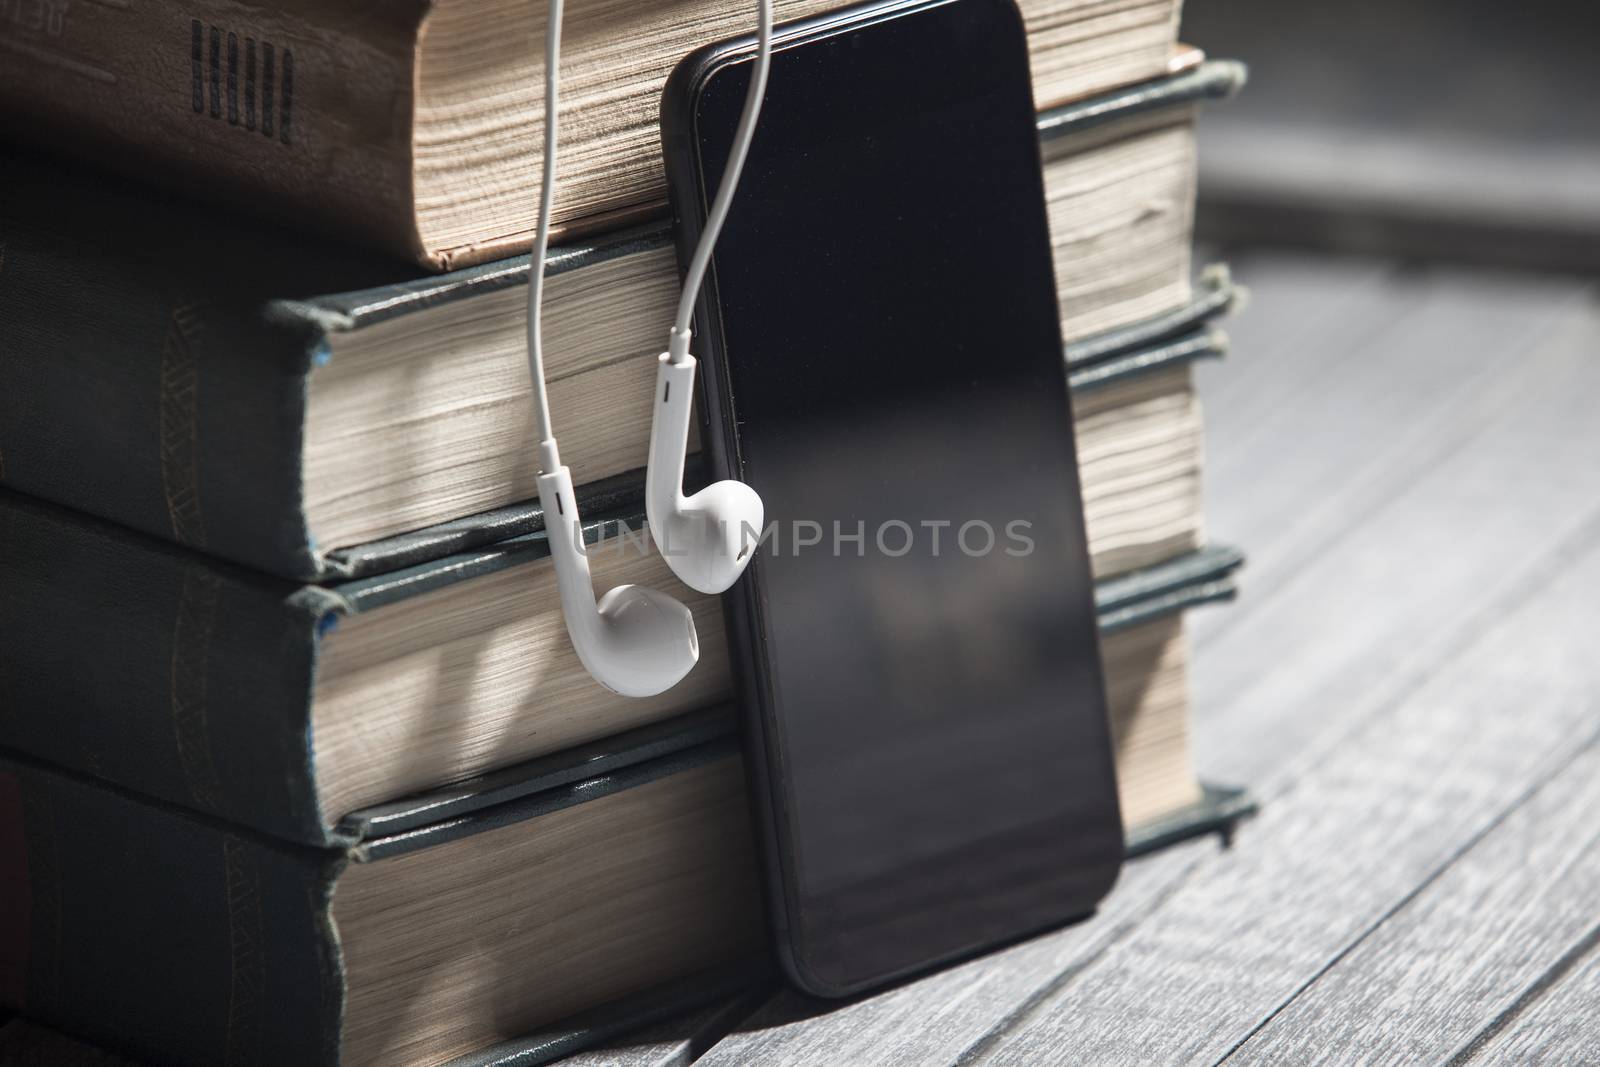 Listen adudiobooks by snep_photo